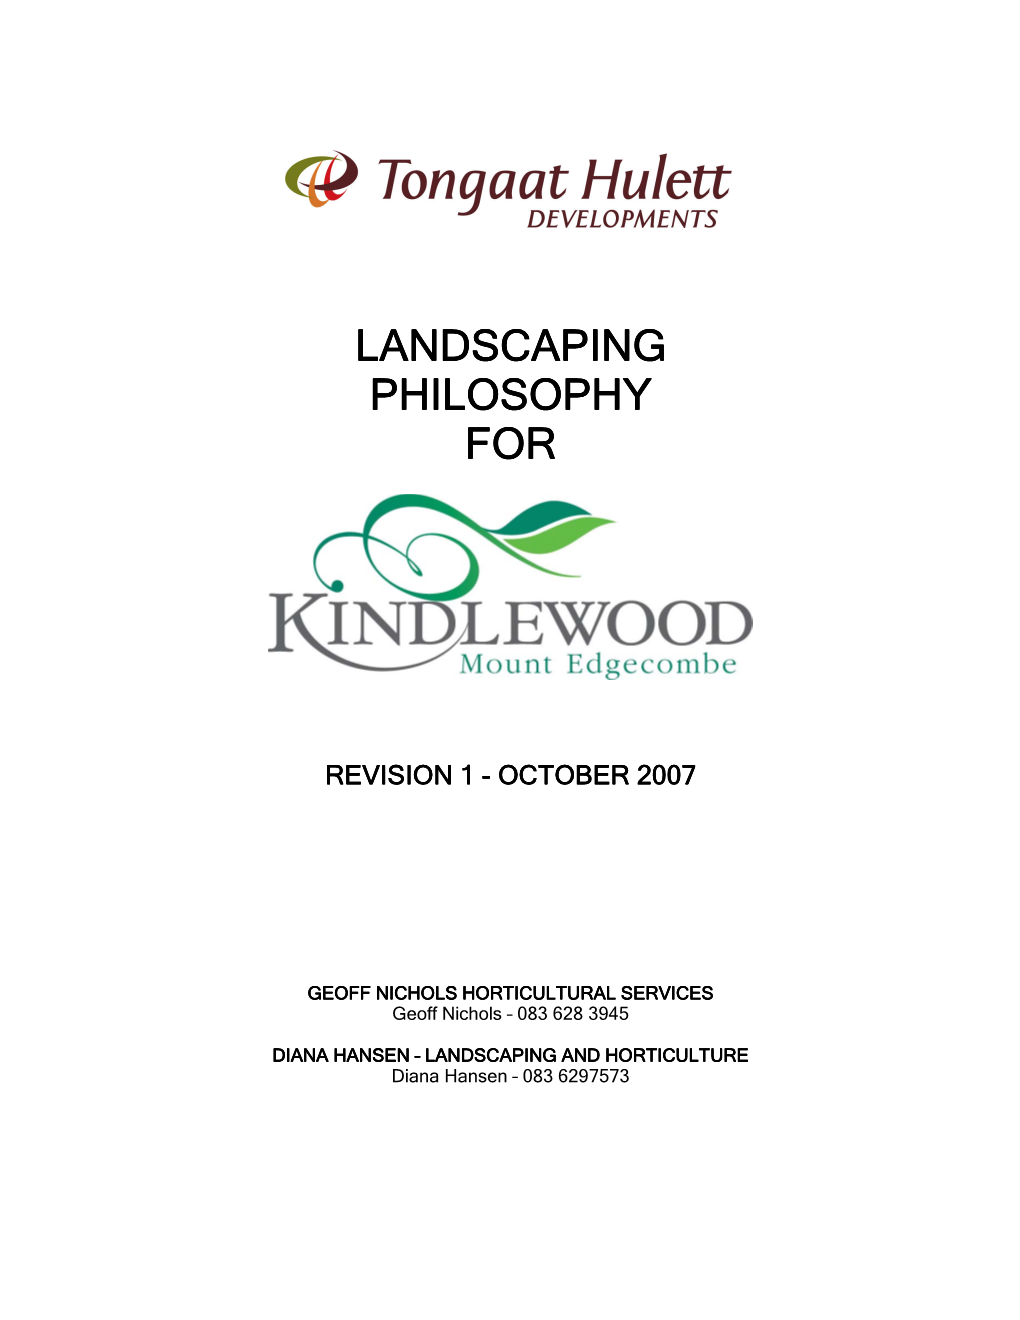 Landscaping Philosophy for Kindlewood, Mount Edgecombe, Kwa-Zulu Natal